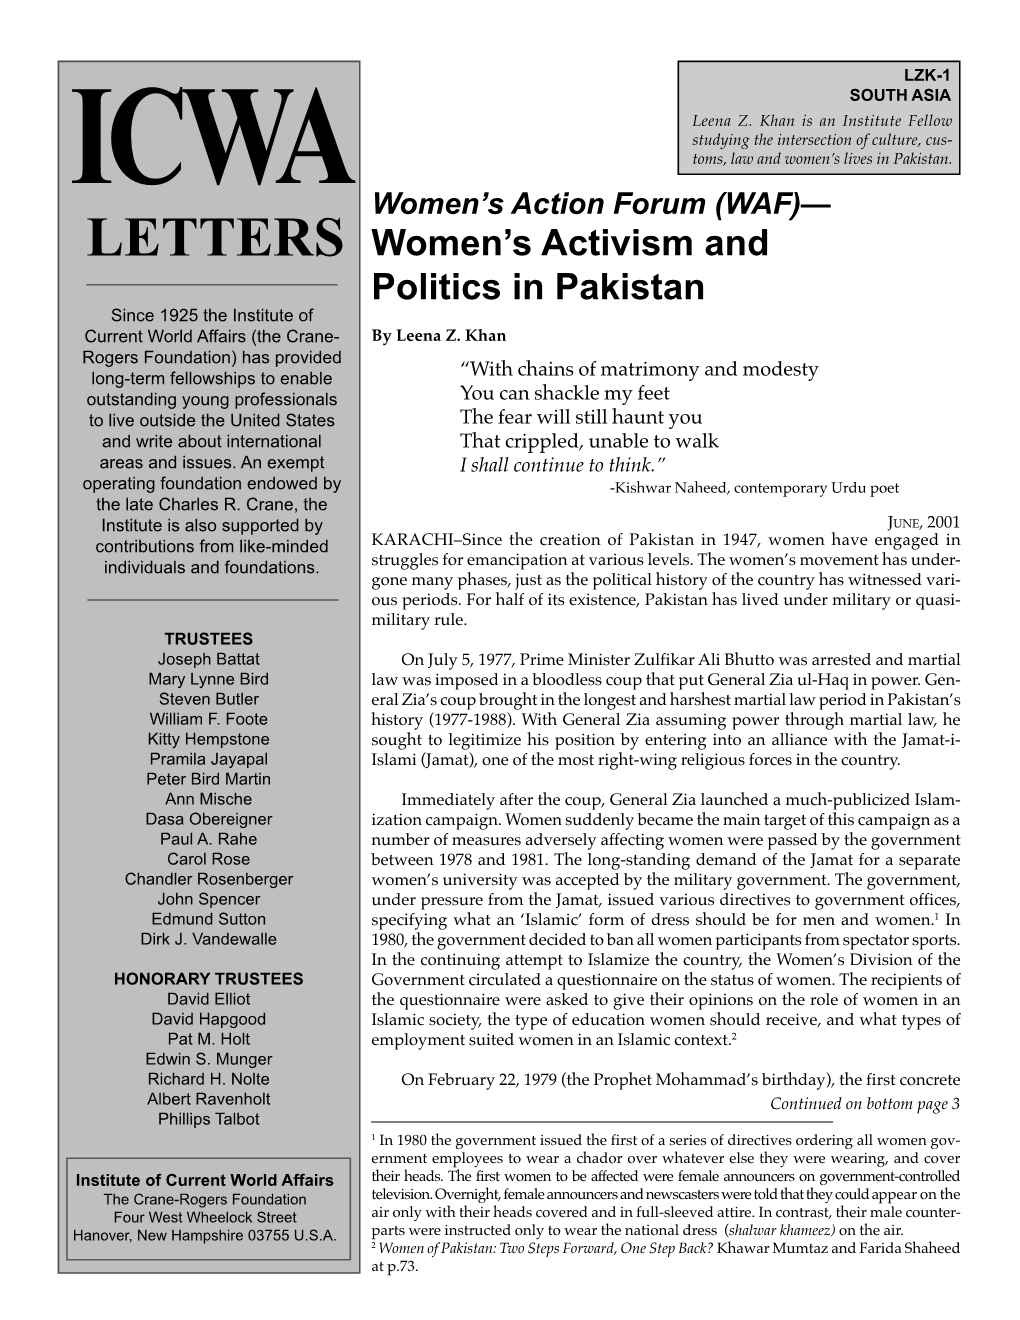 (WAF): Women's Activism and Politics in Pakistan